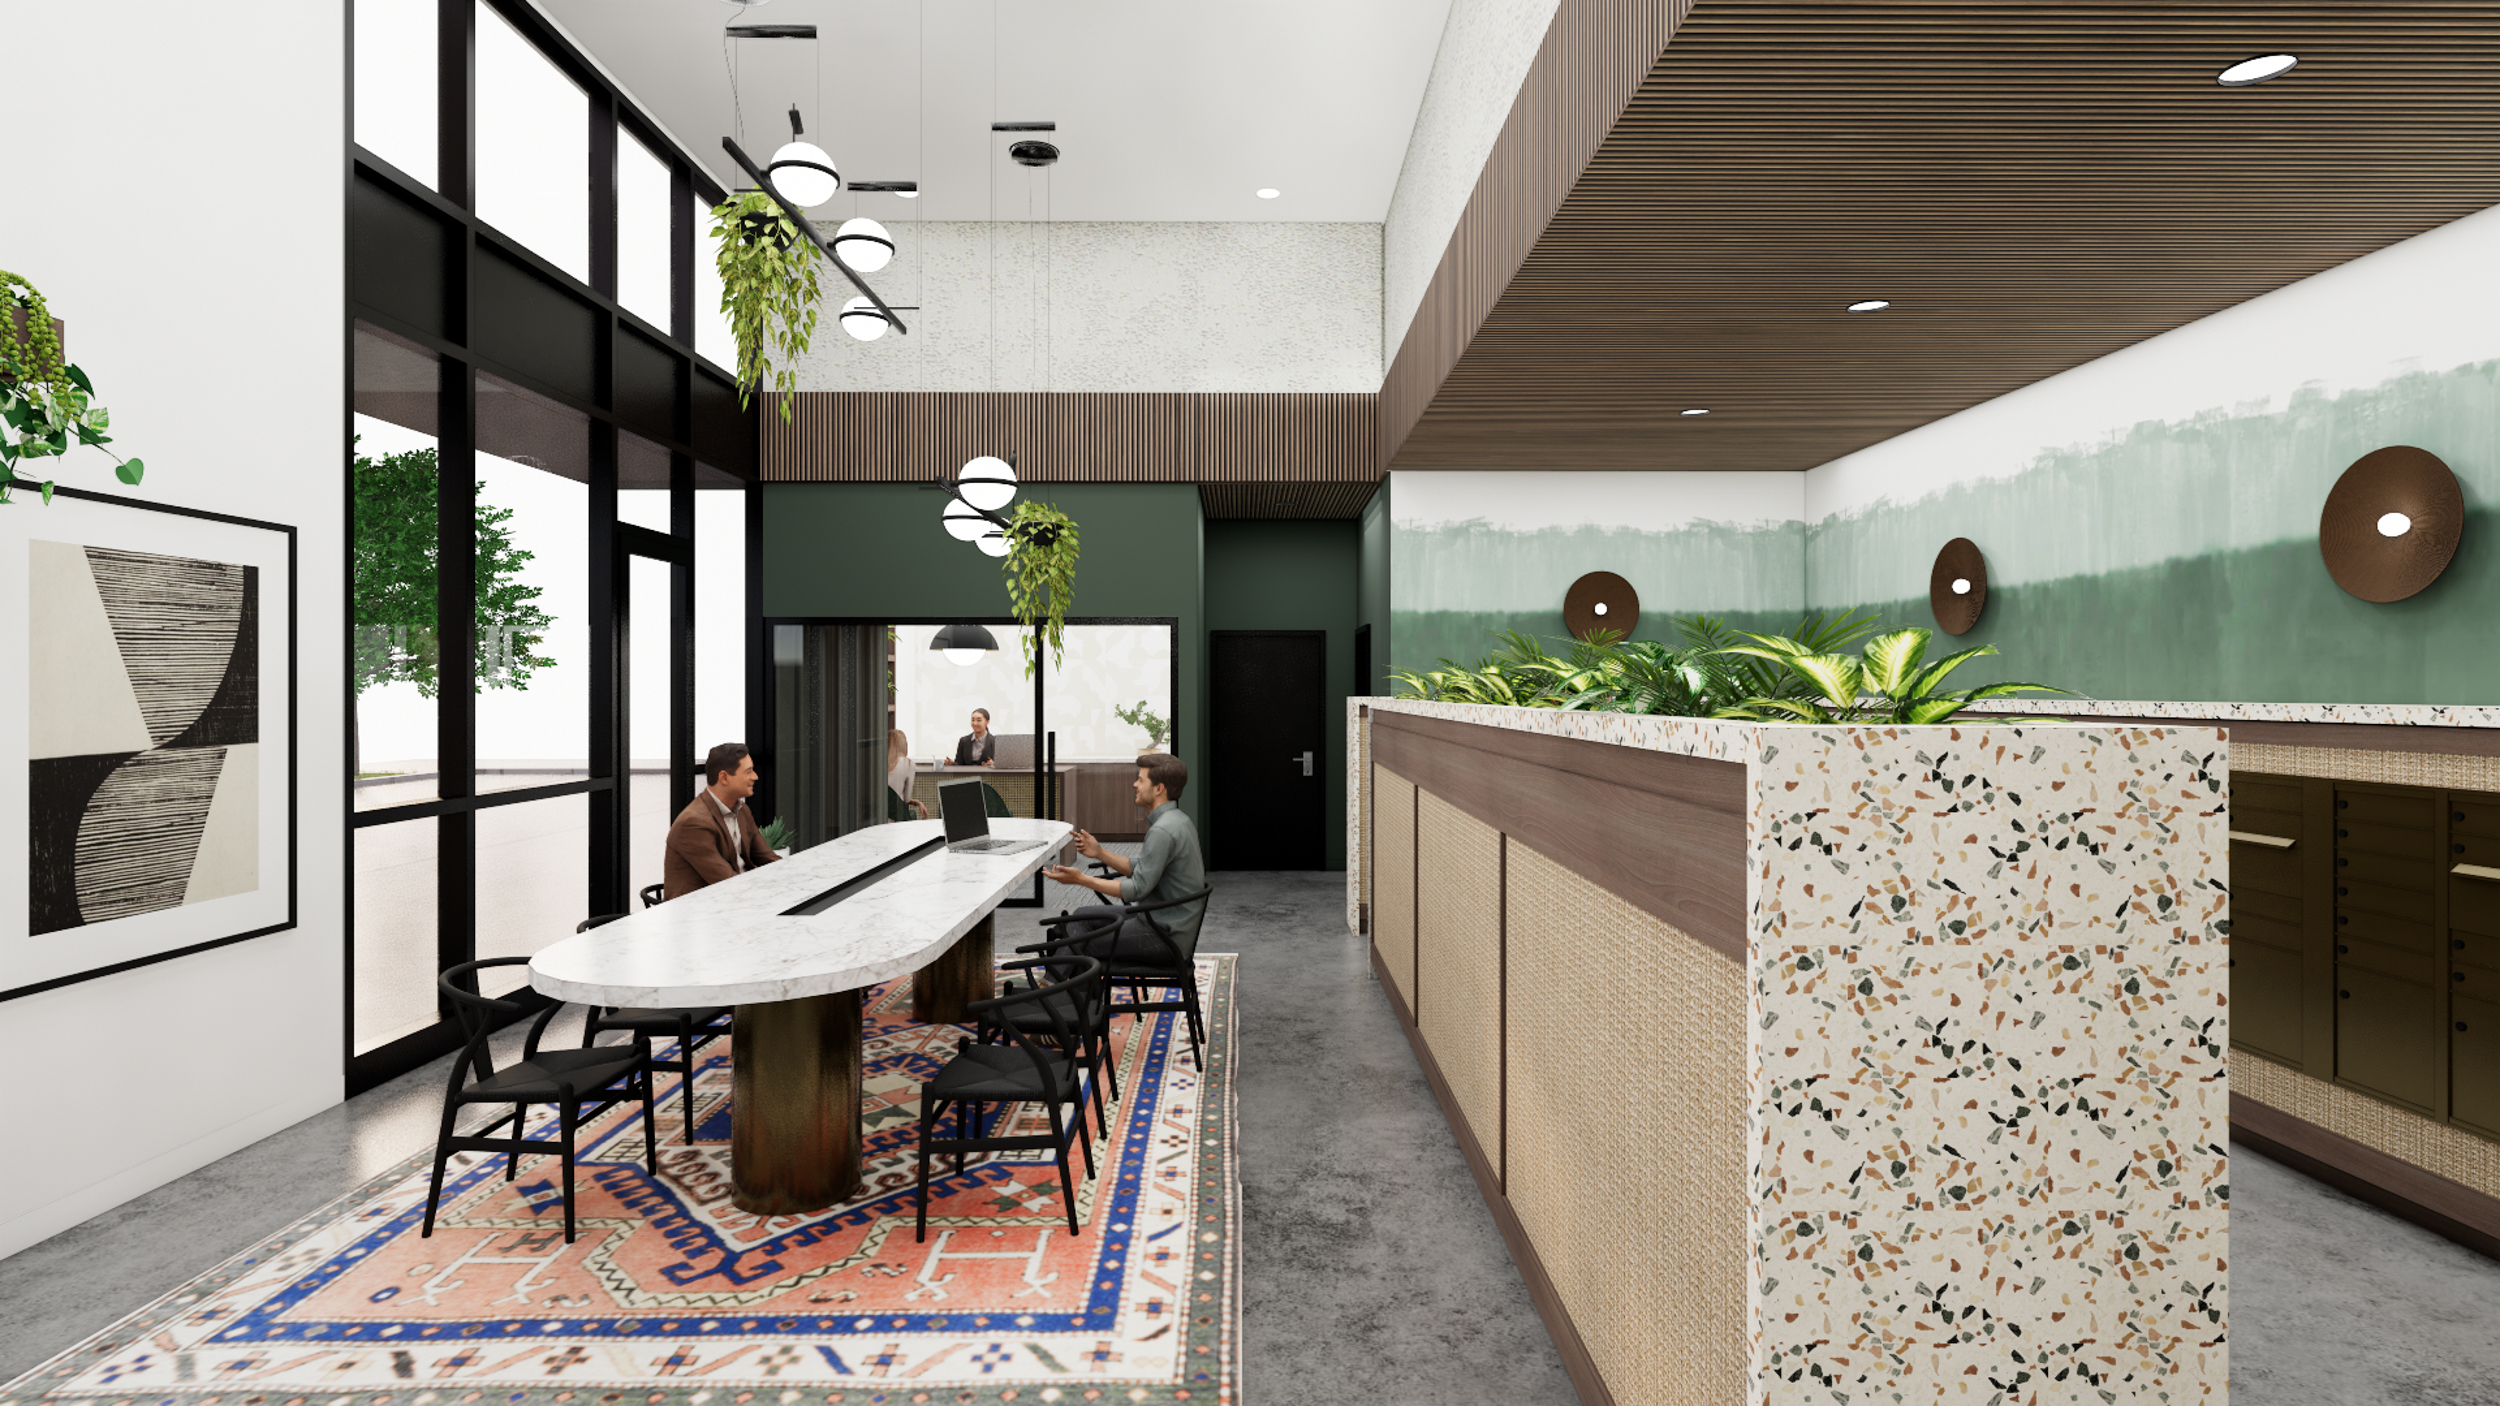 100 Callan Street office amenities, rendering via project website